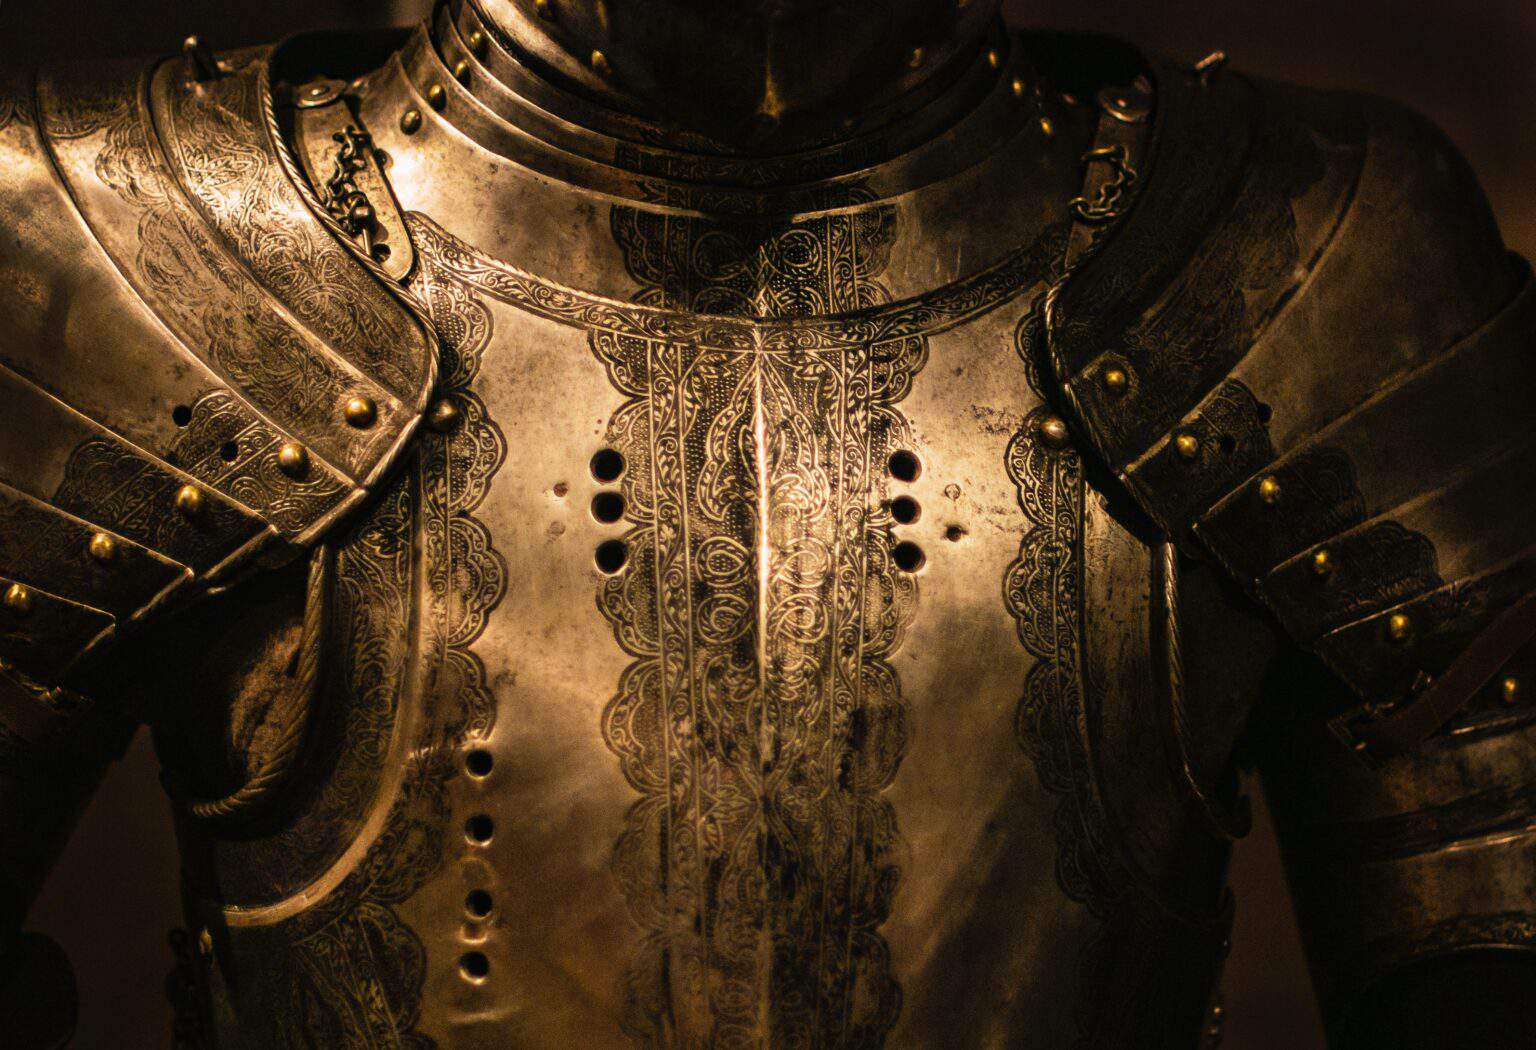 armor of God